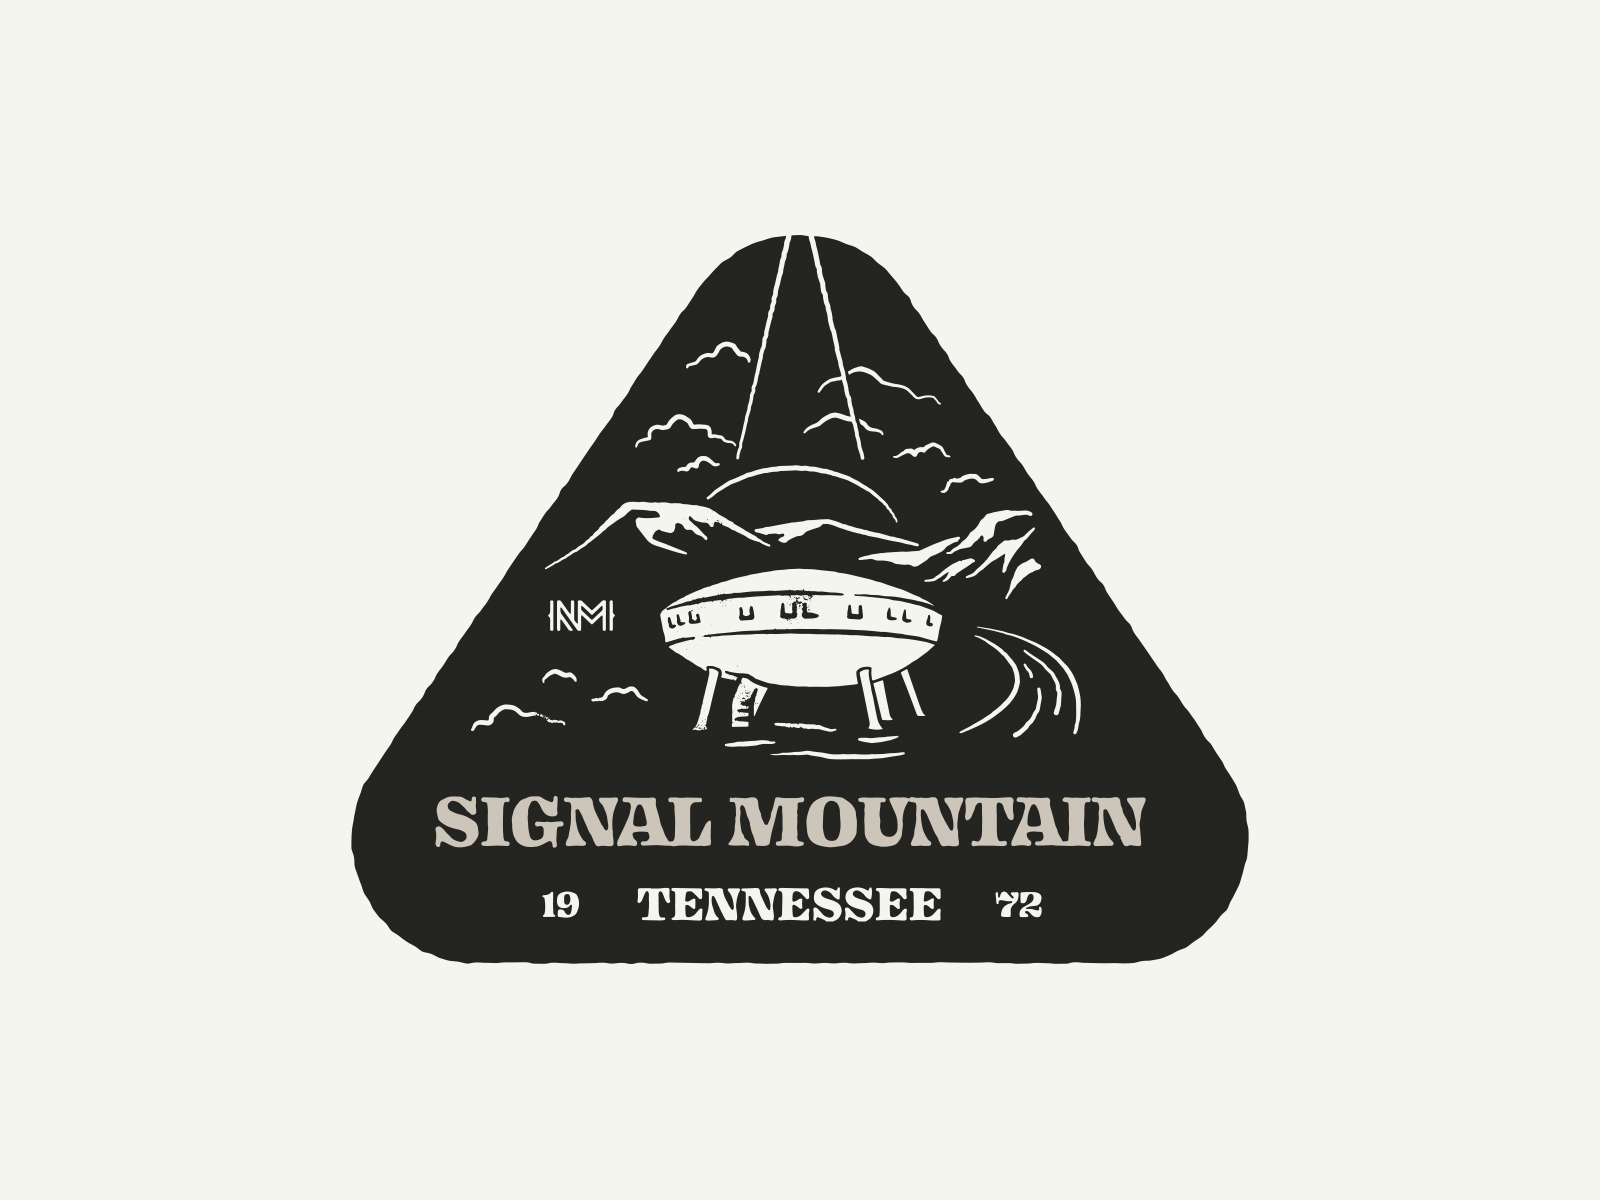 Signal Mountain Spaceship House by Adam Tetzlaff on Dribbble